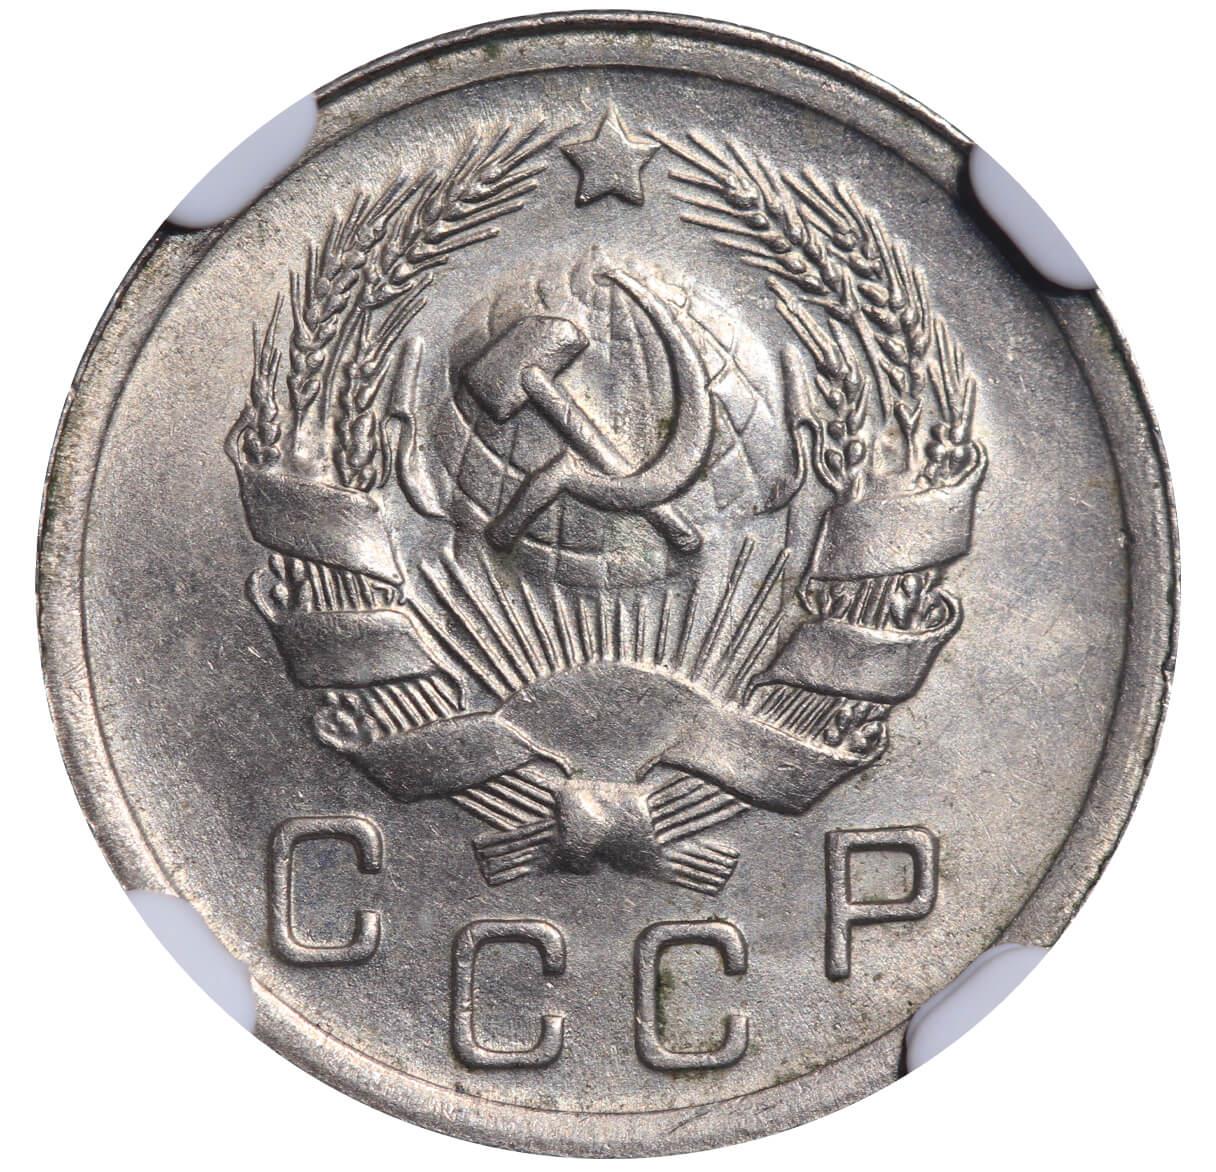 Soviet Union, 10 Kopecks, 1936 year, NGC, MS 64 - Image 2 of 3